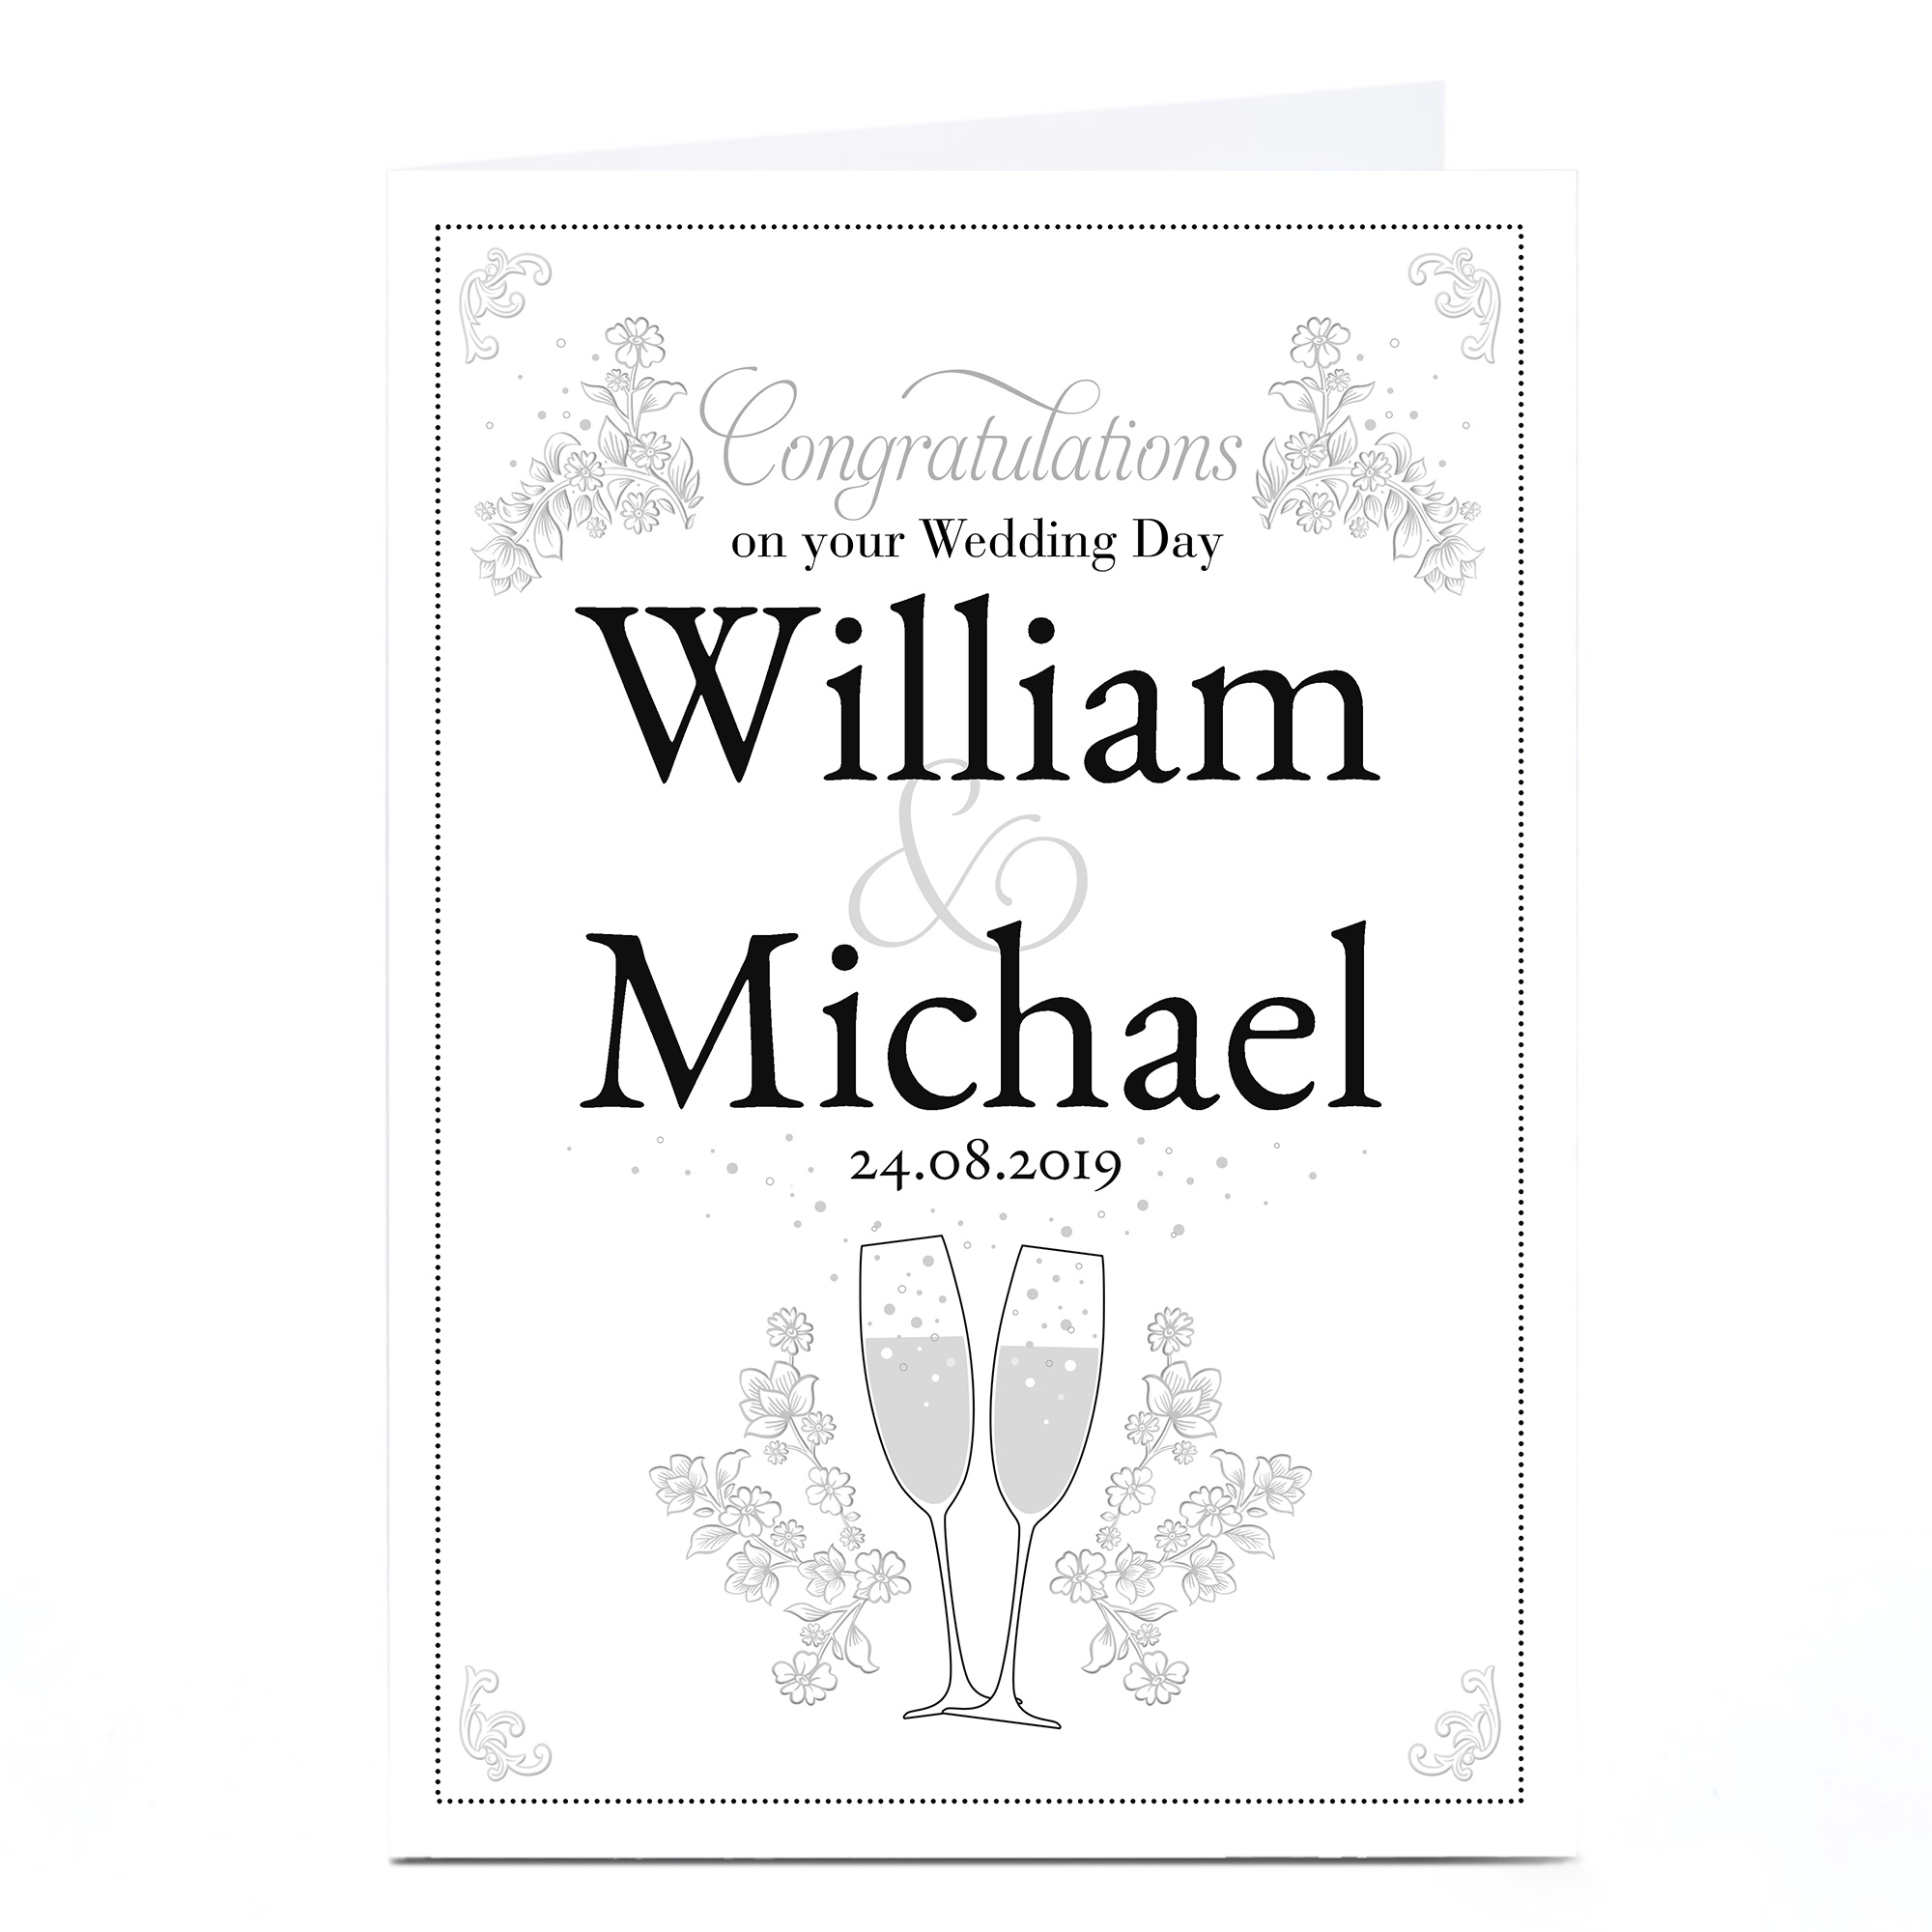 Personalised Wedding Card - Monochrome Congratulations